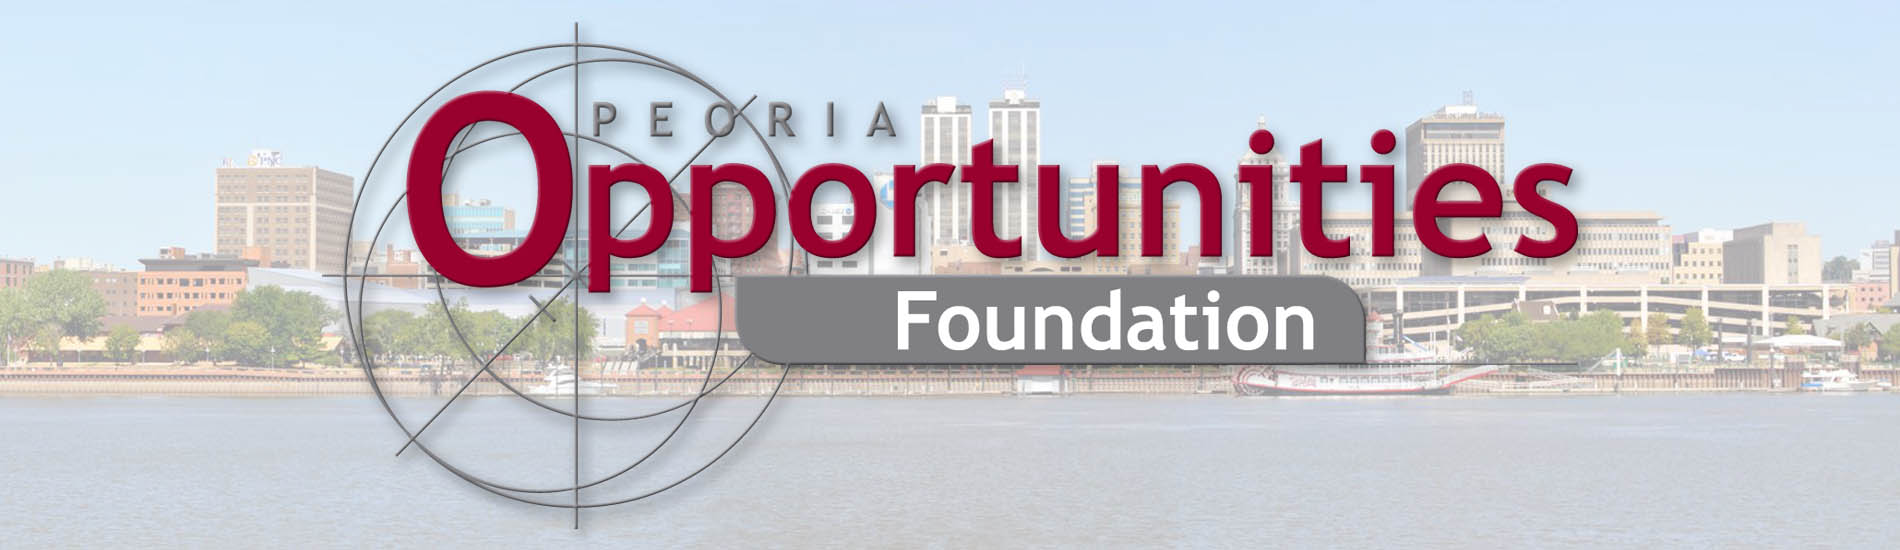 Peoria Opportunities Foundation